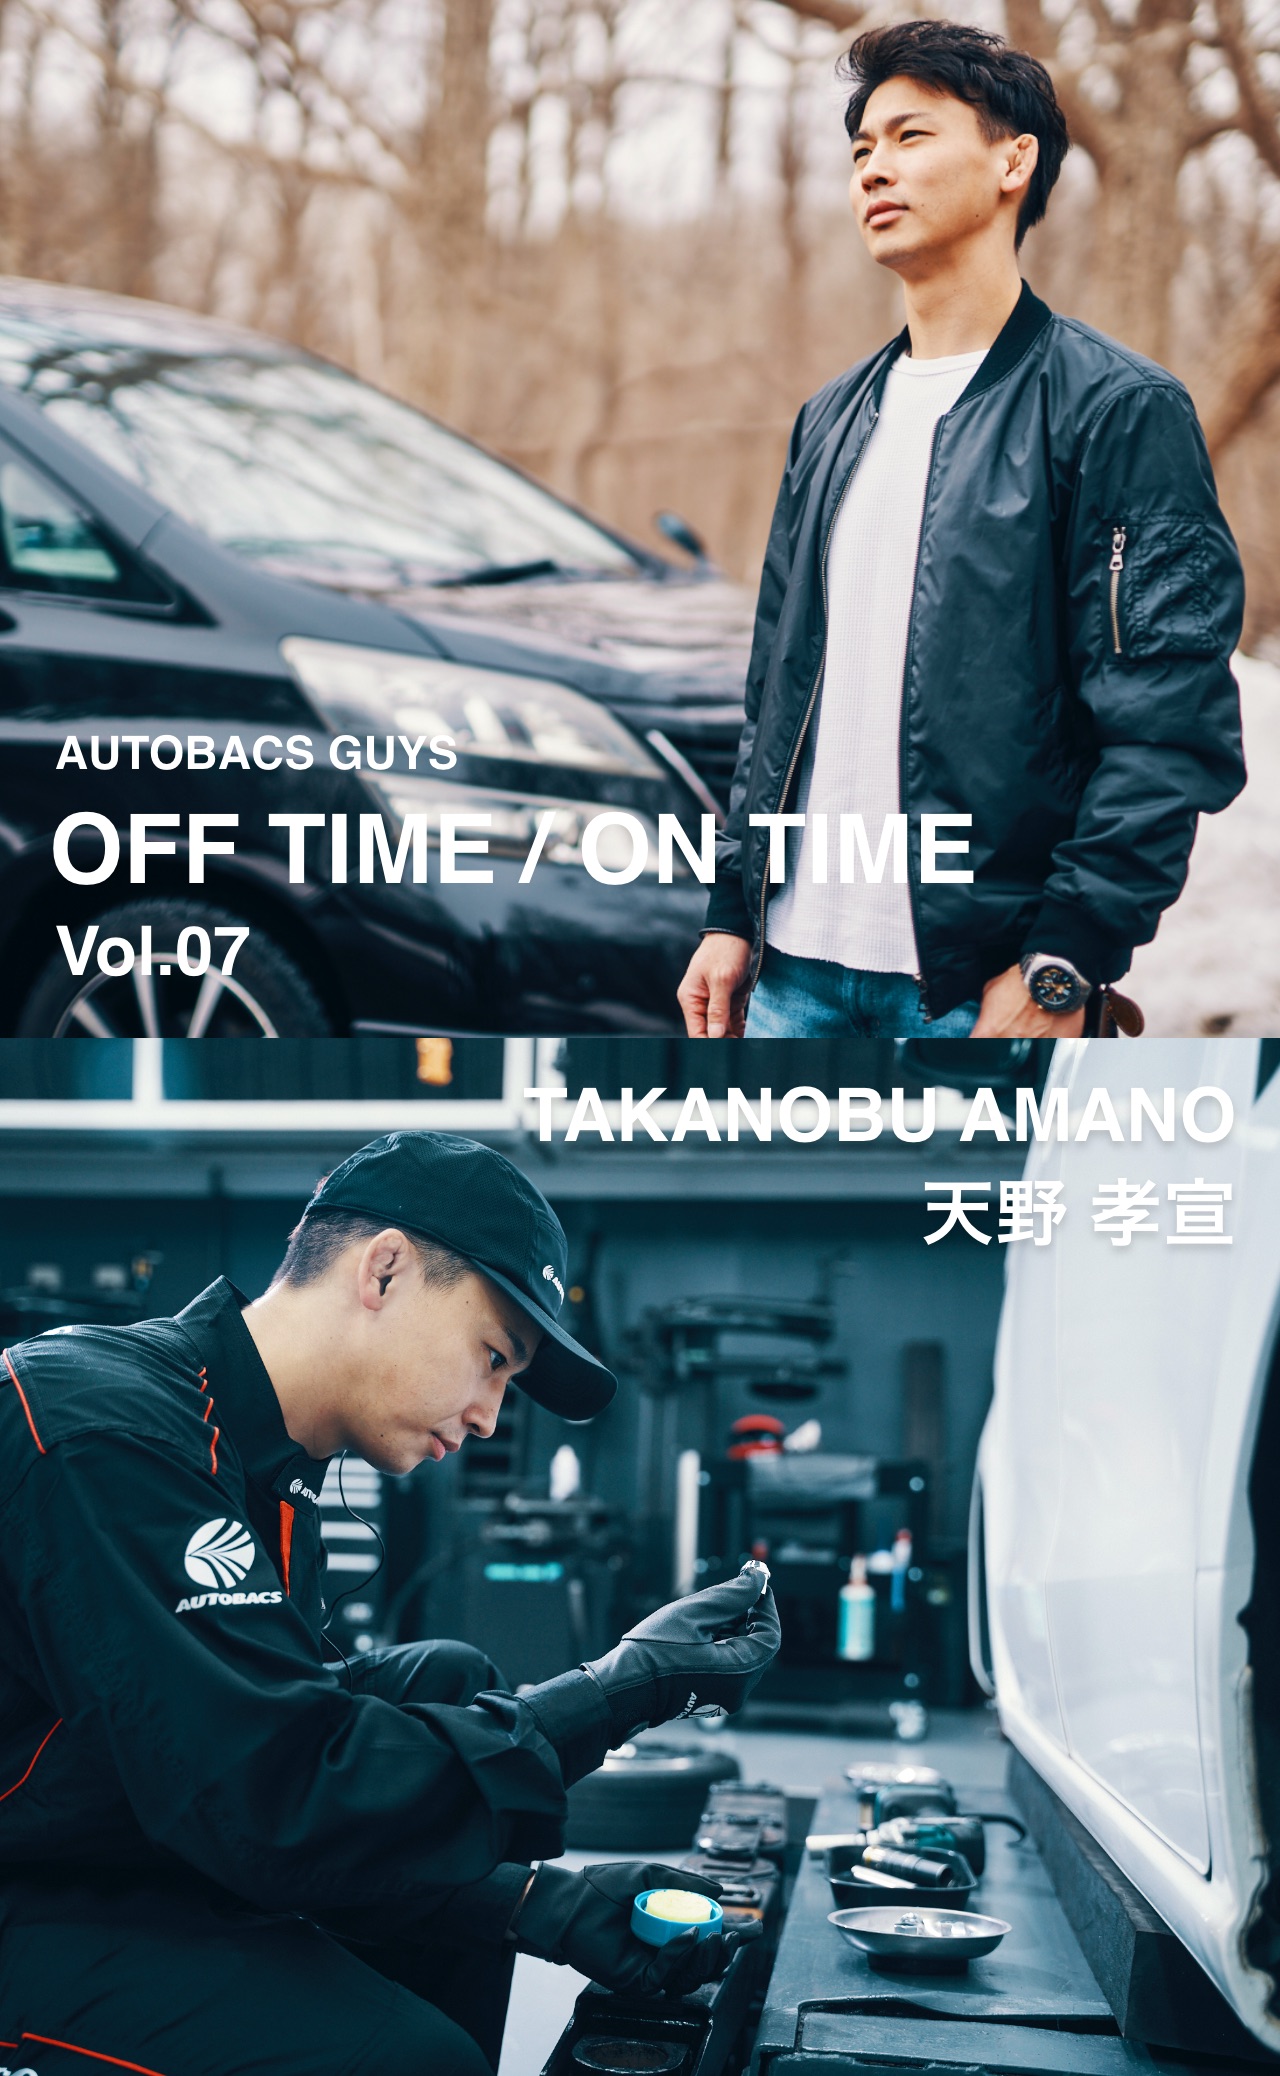 AUTOBACS GUYS OFF TIME / ON TIME オートバックスガイズの裏側　Vol.07 : 天野 孝宣 TAKANOBU AMANO